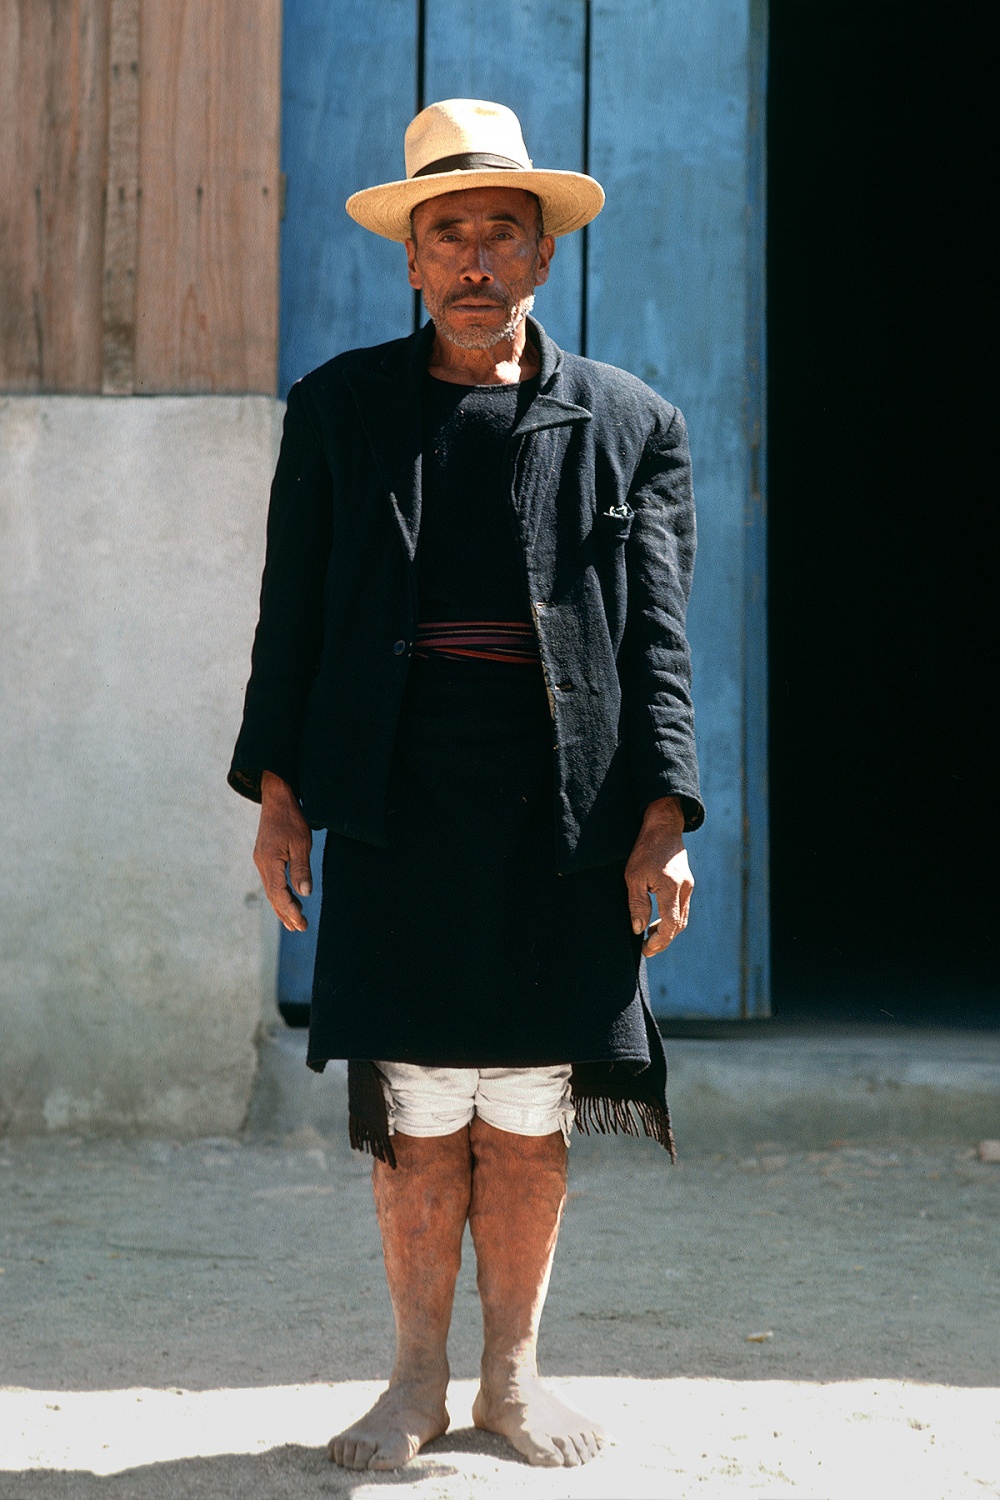 bill-hocker-traditional-dress-panajachel-guatemala-1978